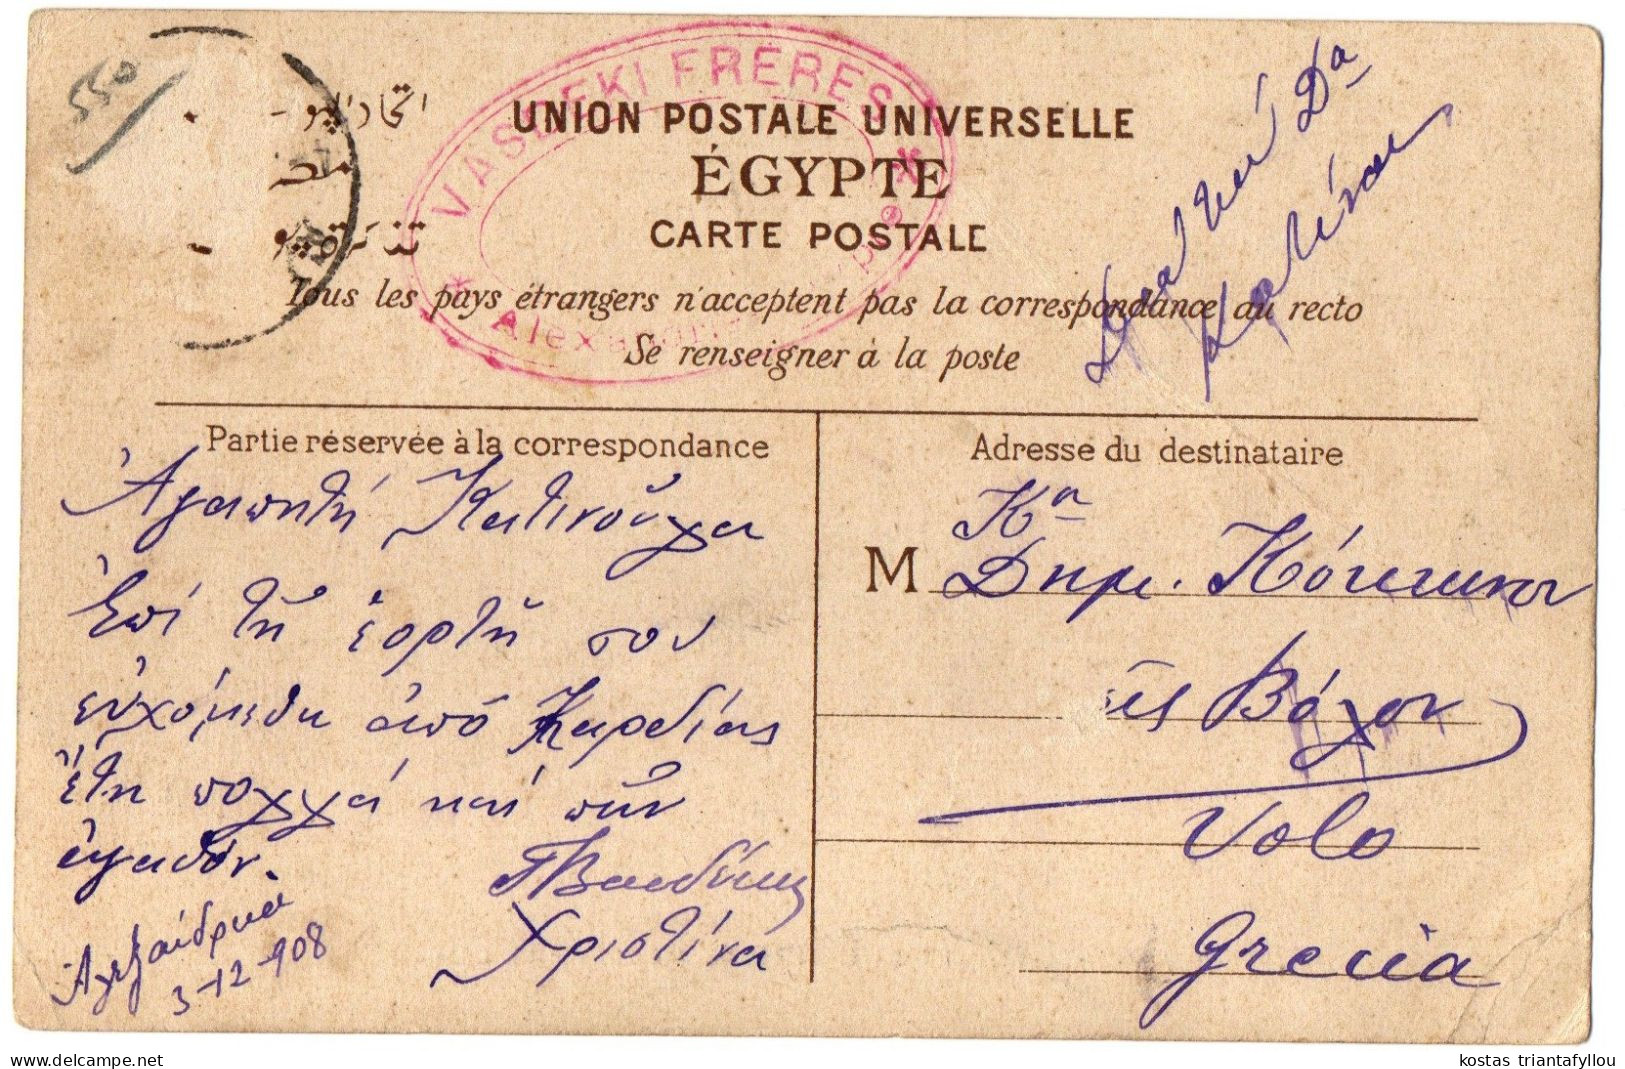 4.1.15 EGYPT, CAIRO, PLACE ATABA EL KHADRA, 1908, POSTCARD - Kairo